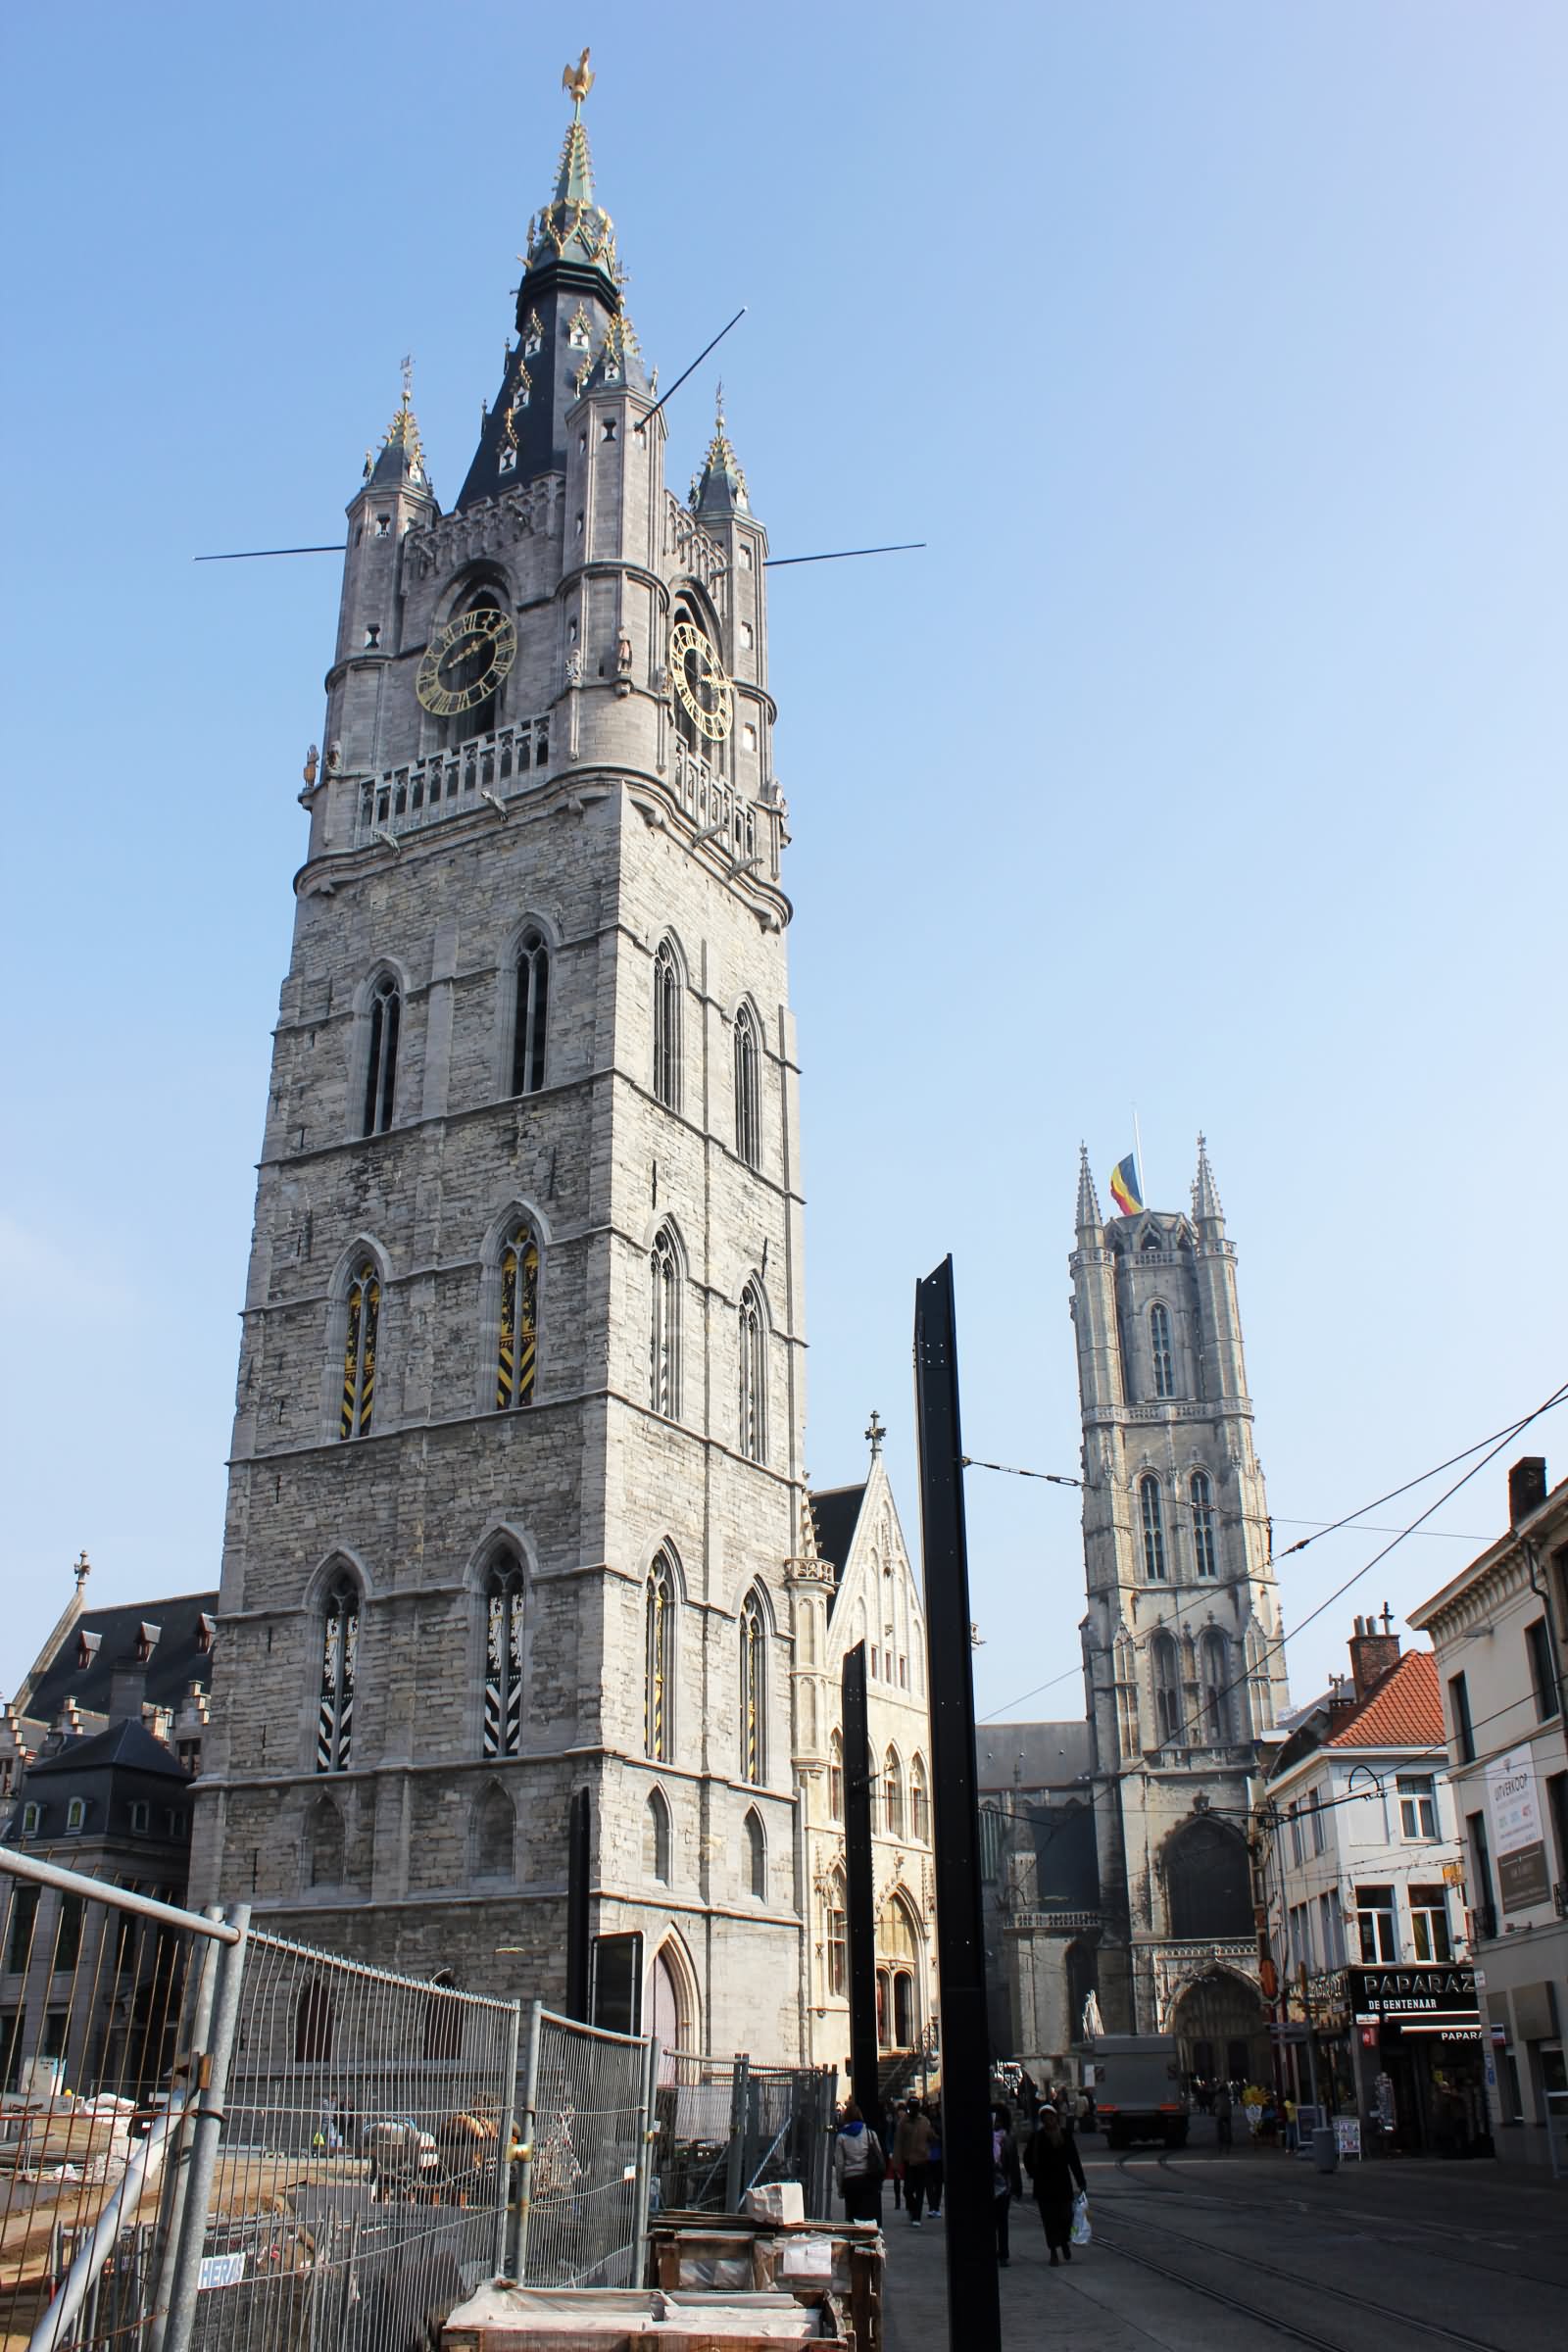 Side View Of The Belfry of Ghent In Belgium